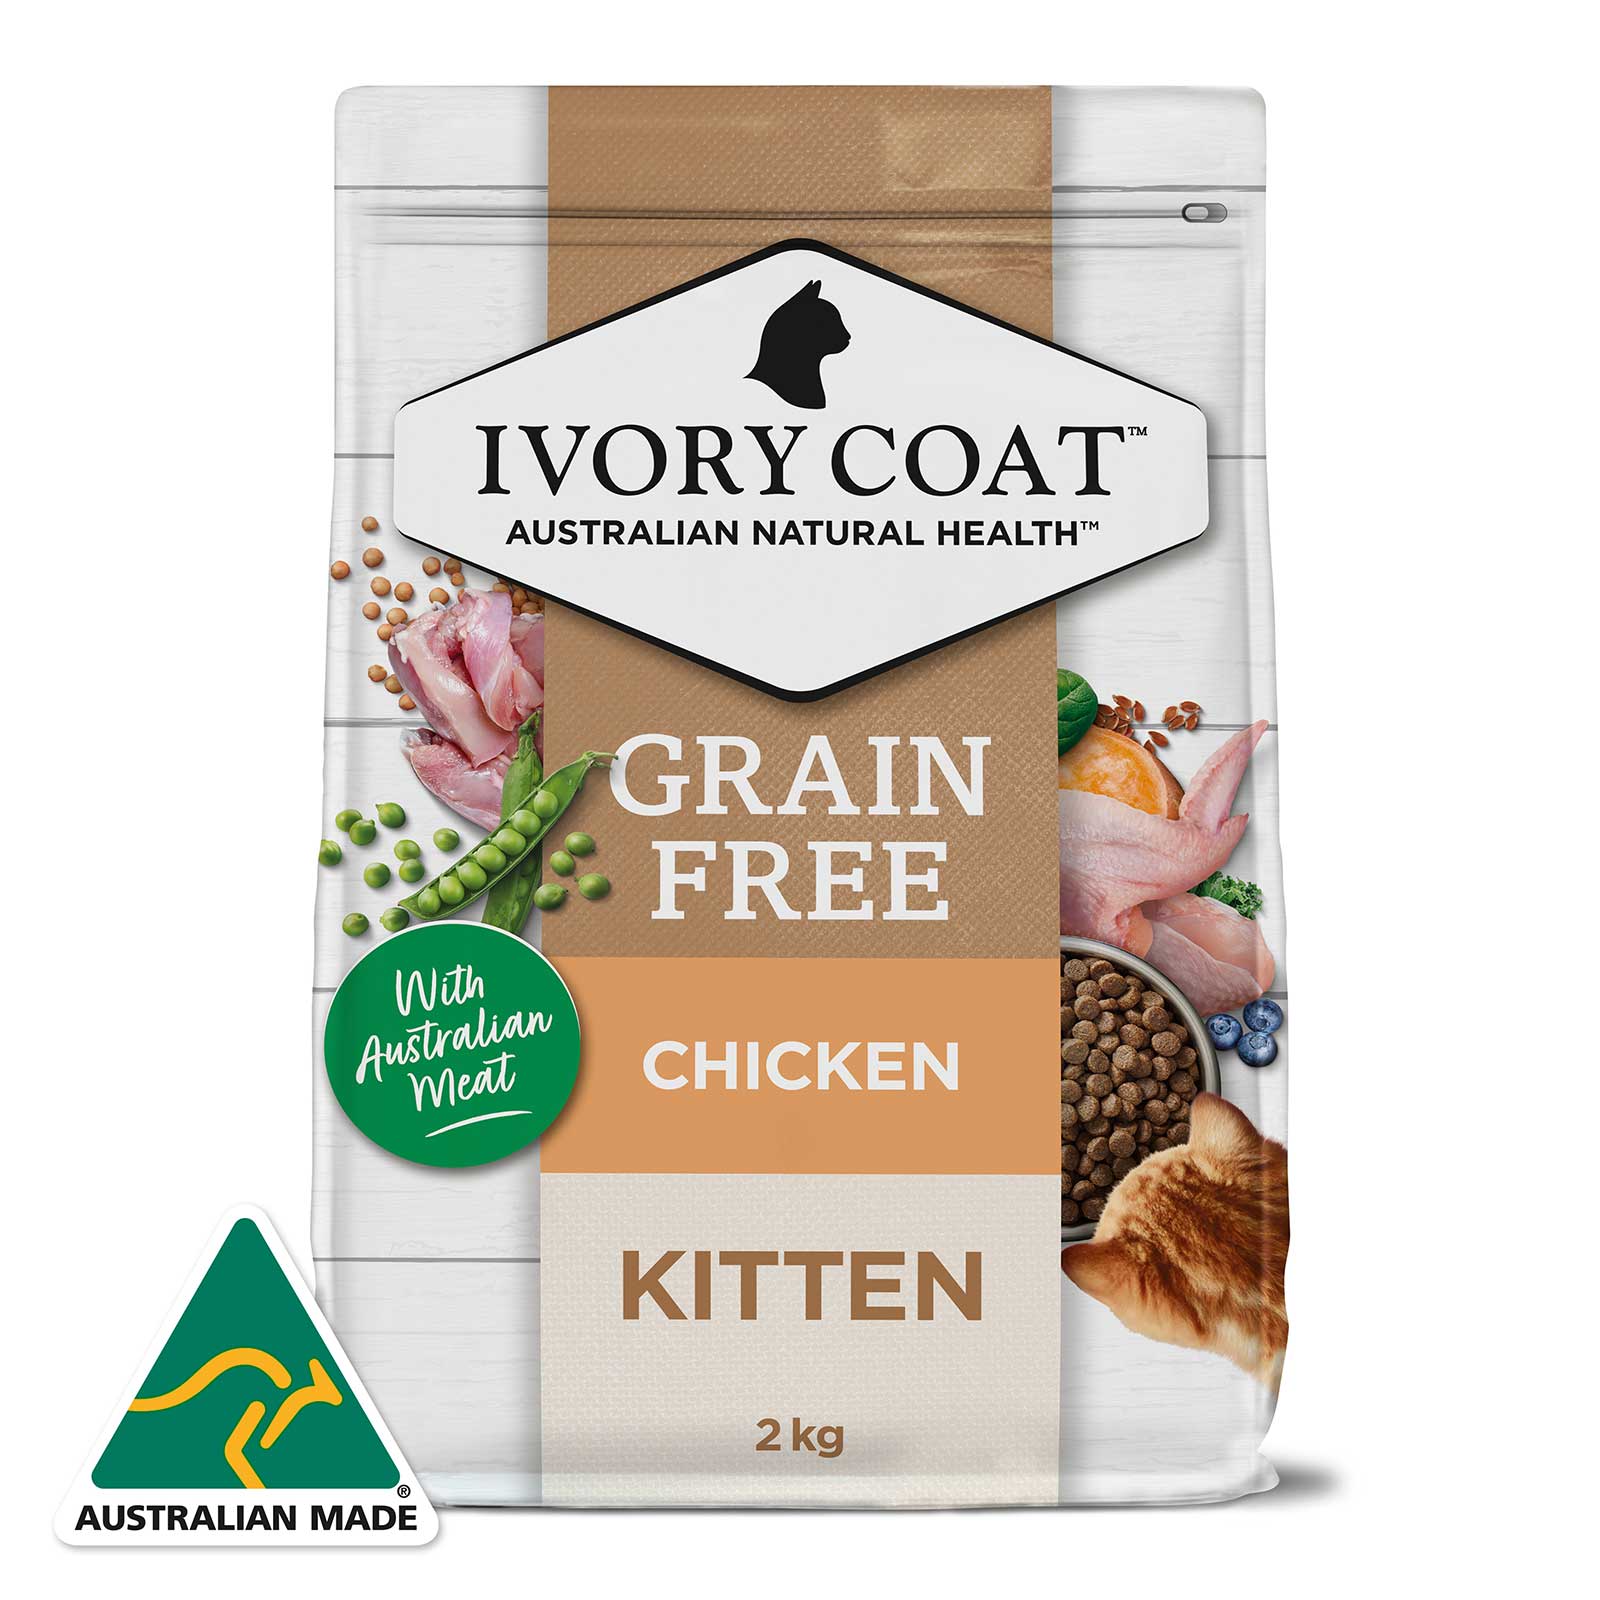 Ivory Coat Grain Free Cat Food Kitten Chicken